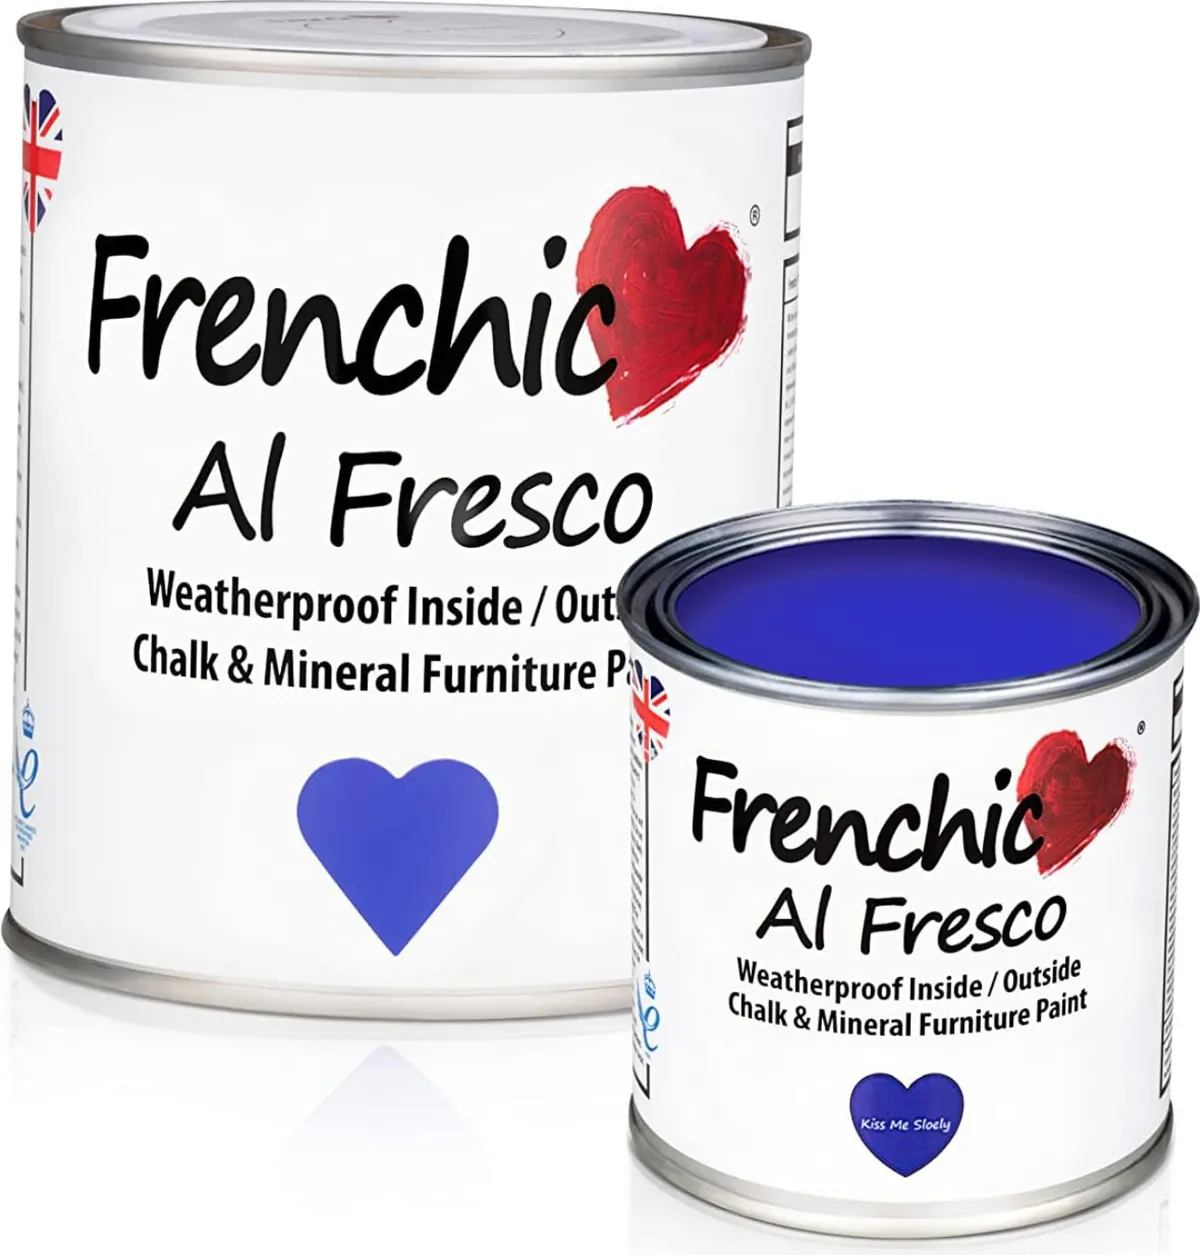 Frenchic Al Fresco Paint in Kiss Me Sloely